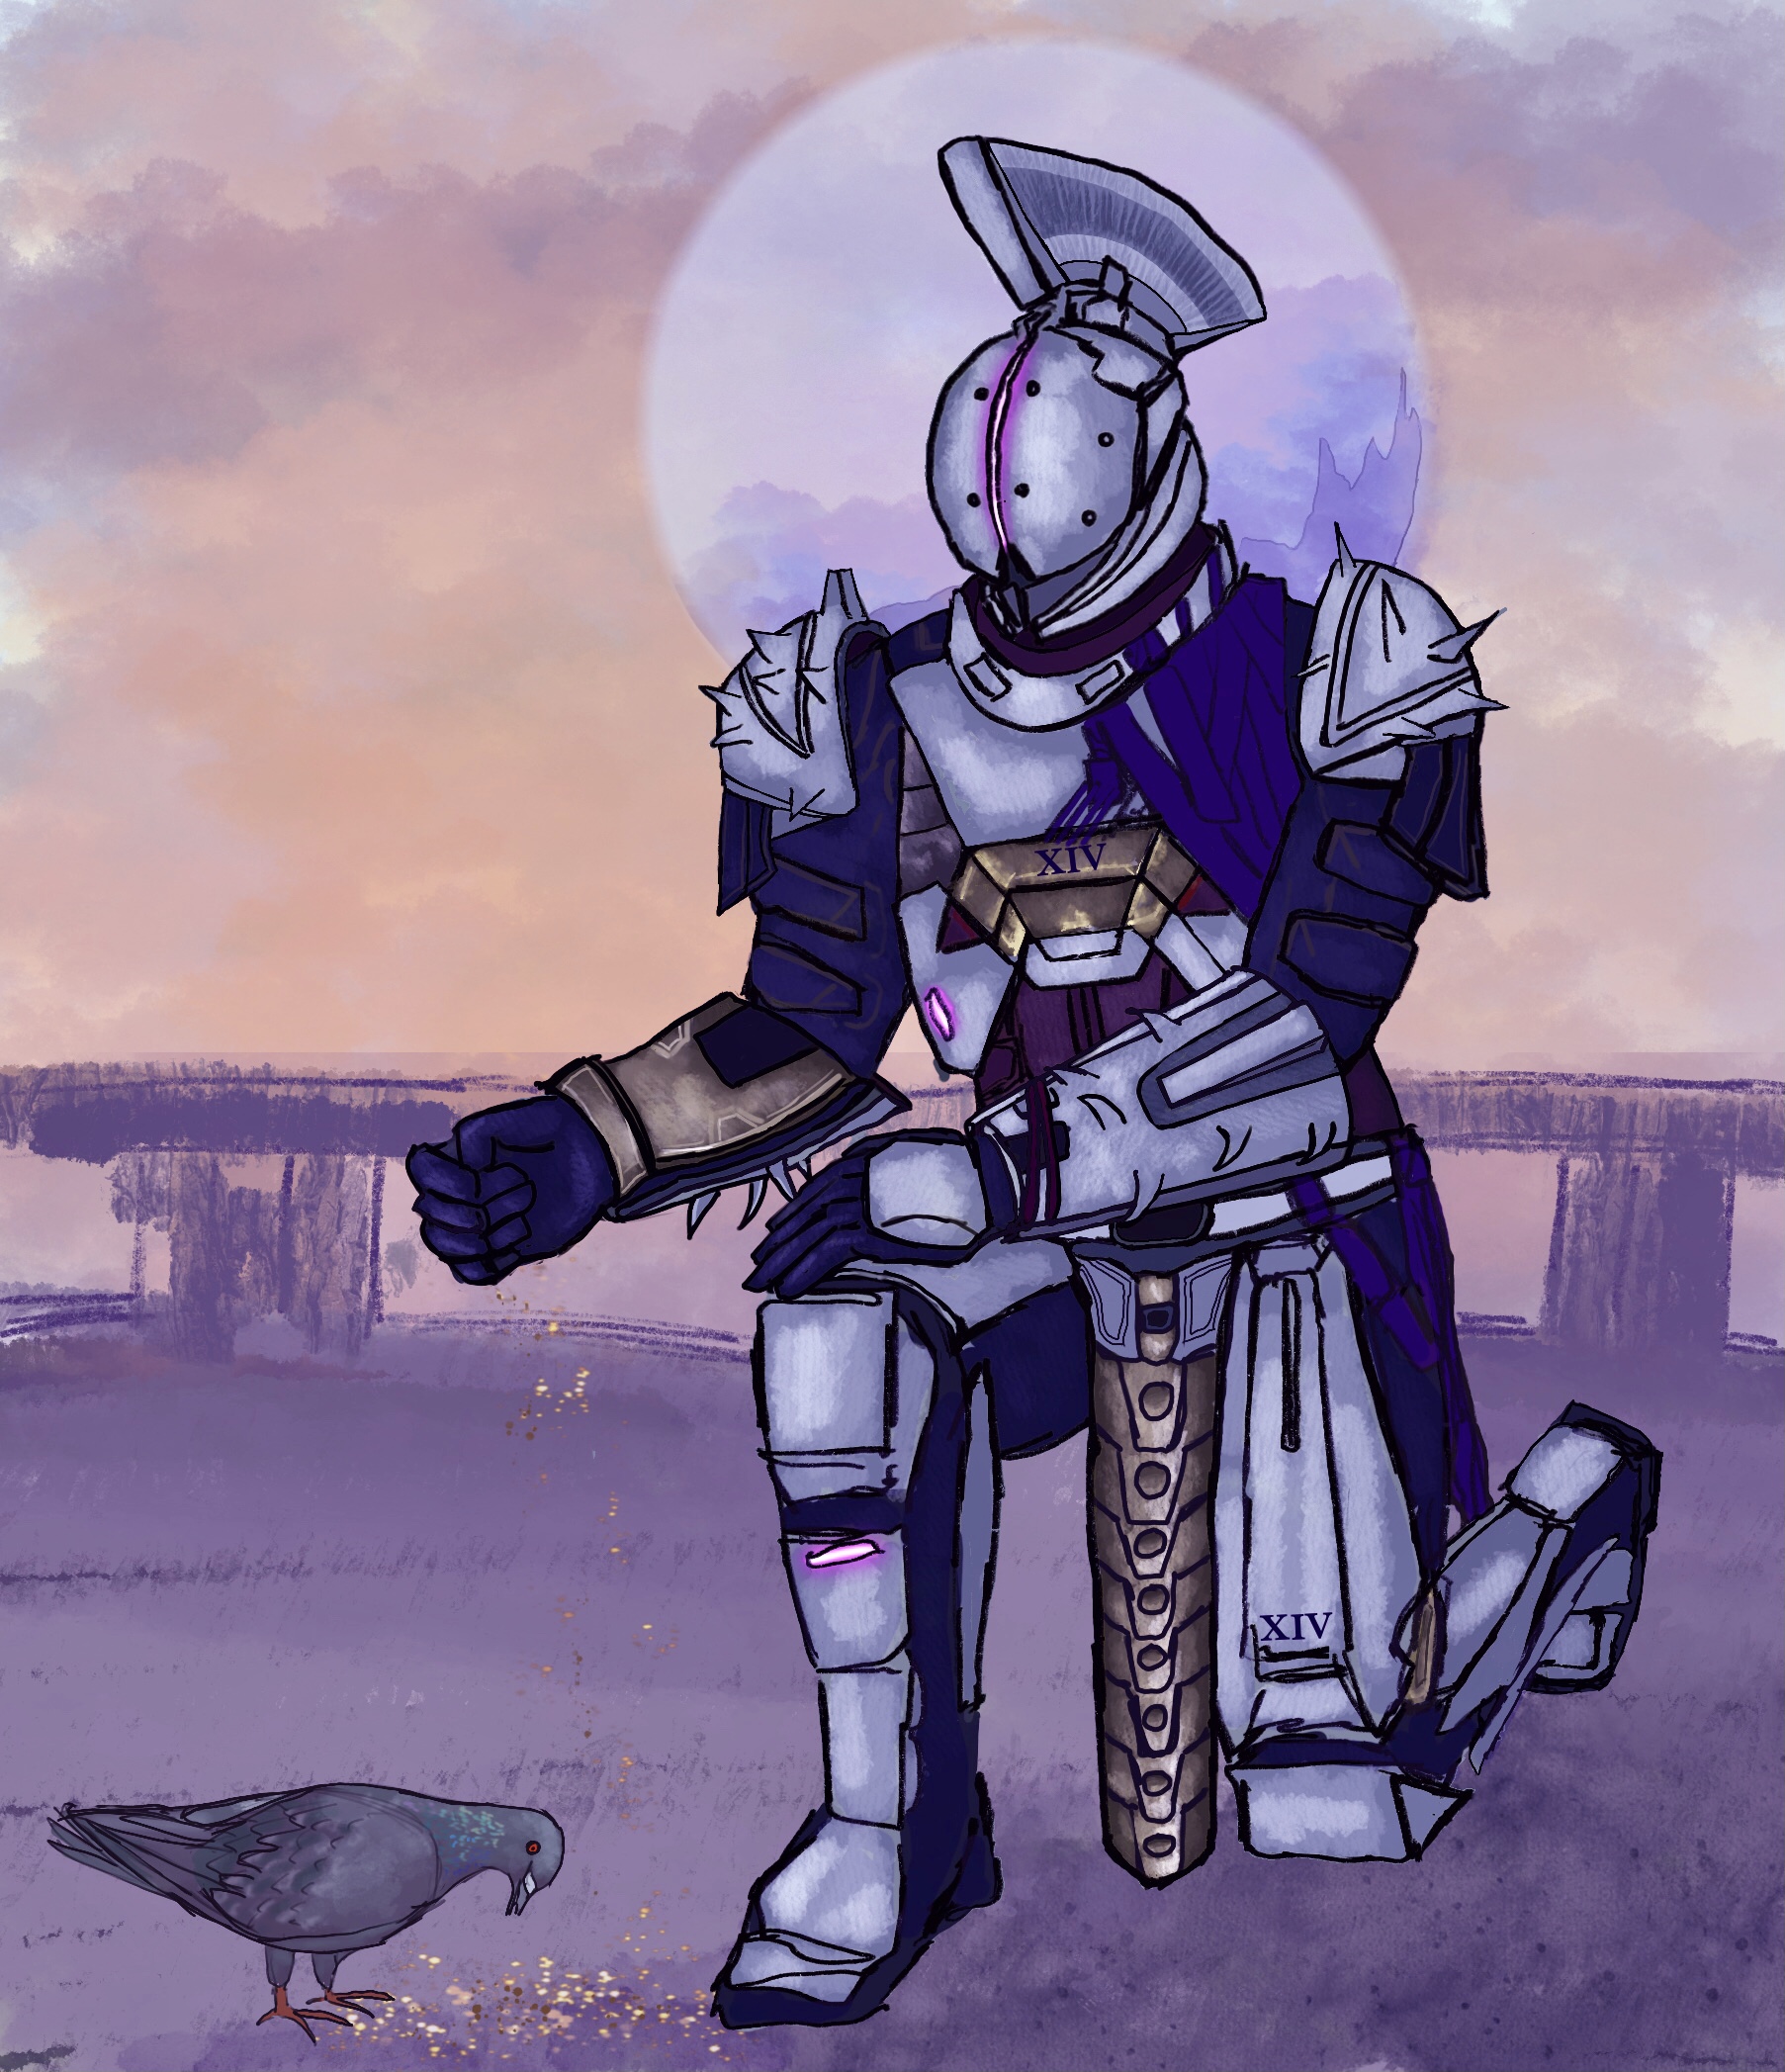 illustration of Destiny 2 character Saint 14